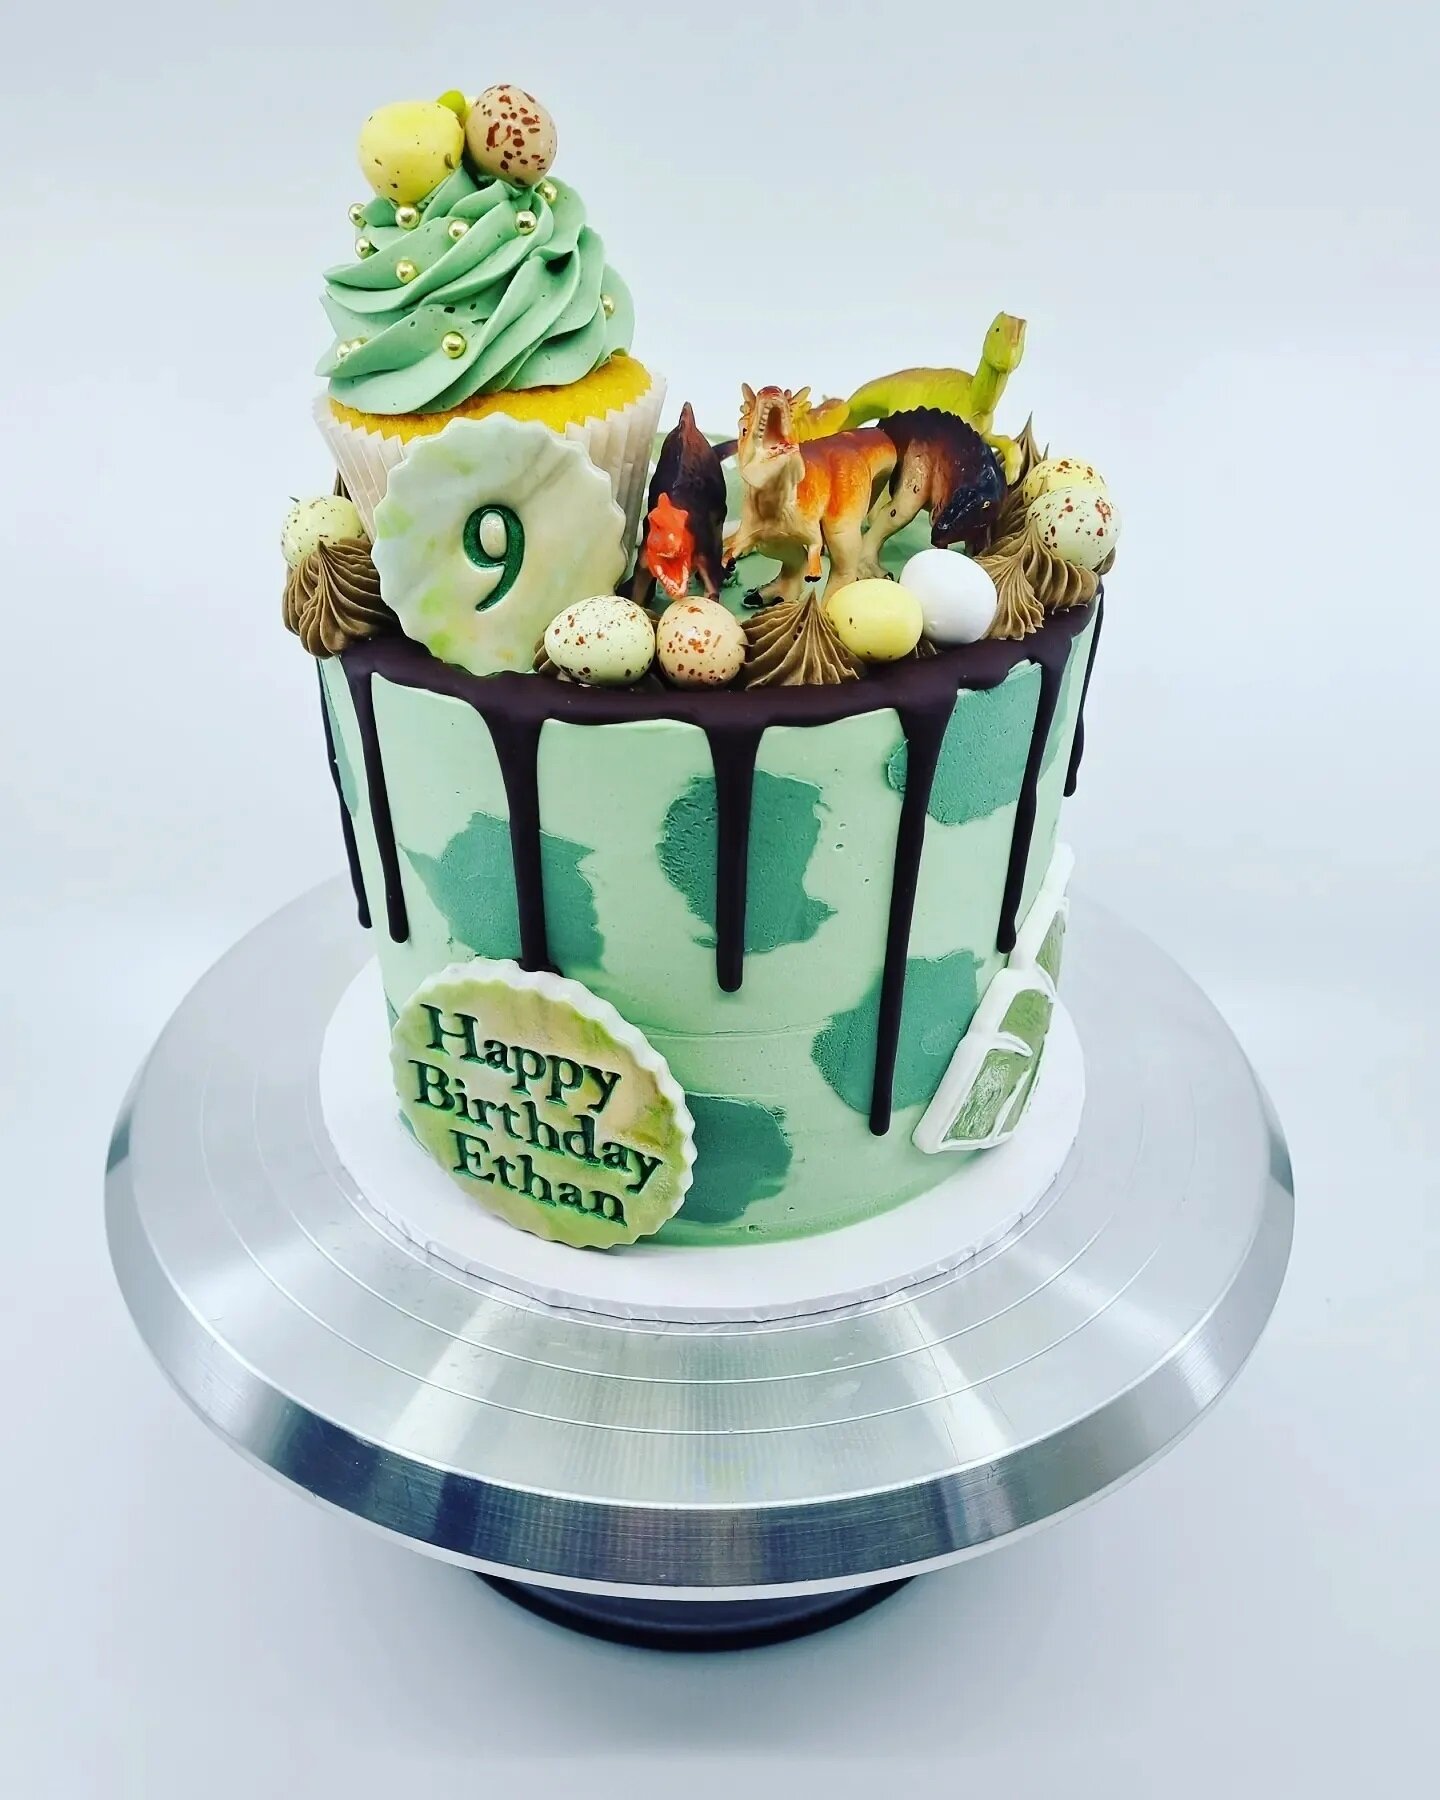 Ethan's 9th Birthday Cake